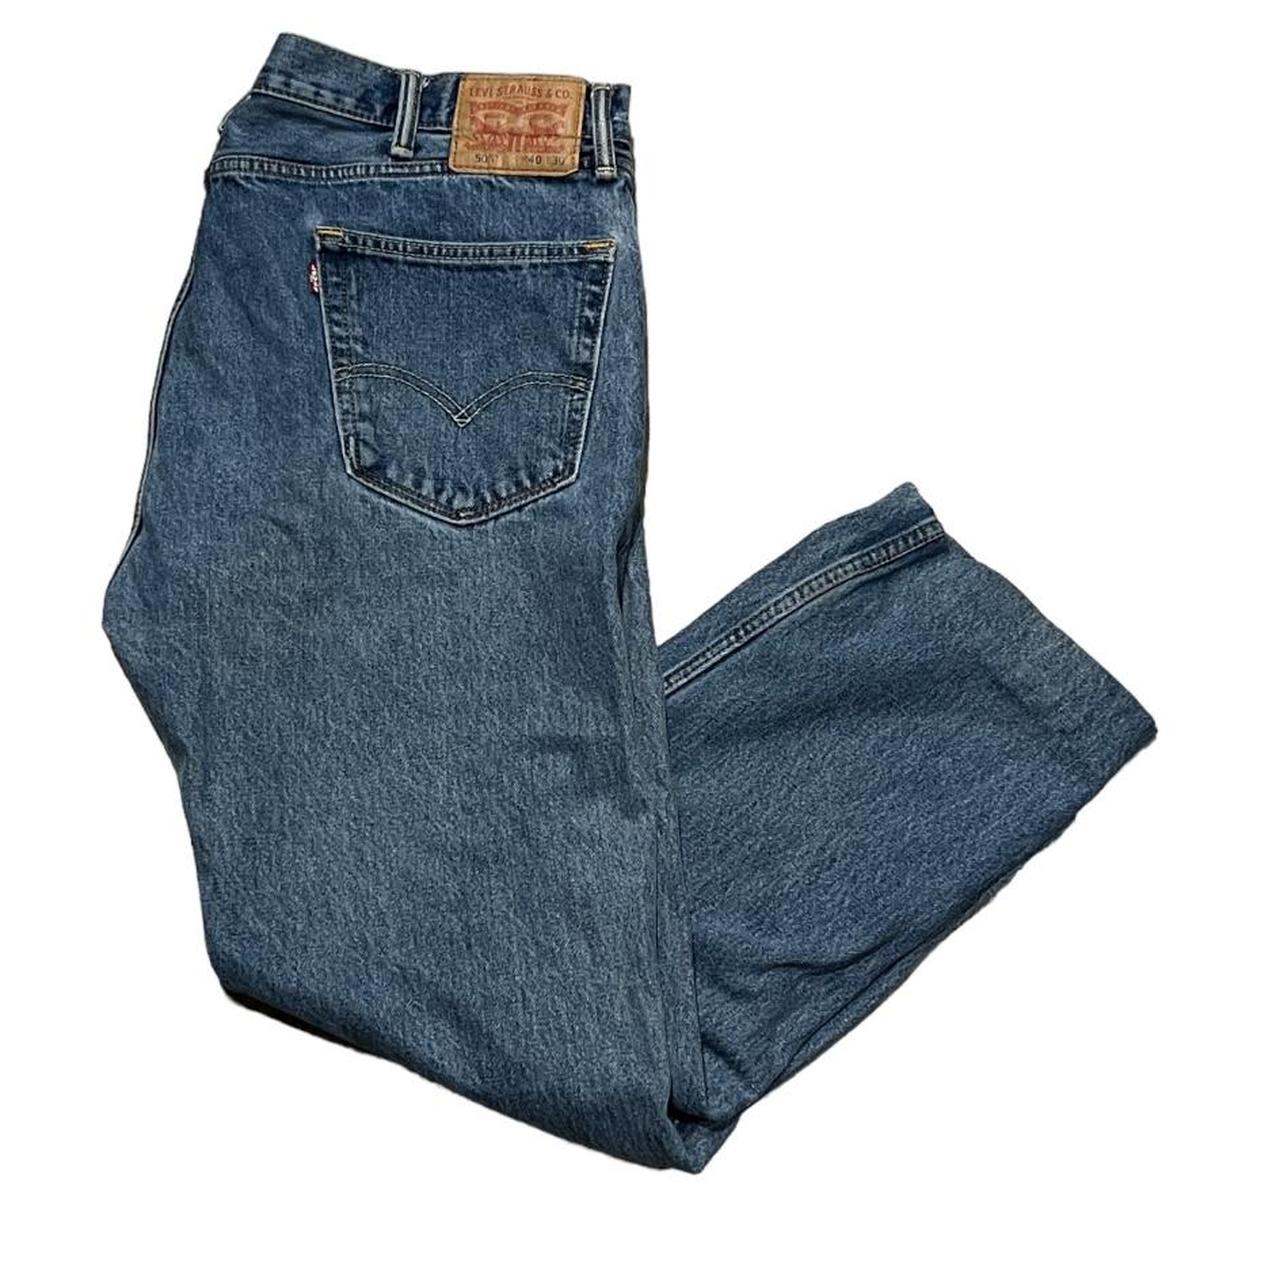 Levi’s 505 Jeans About this item: Condition:... - Depop